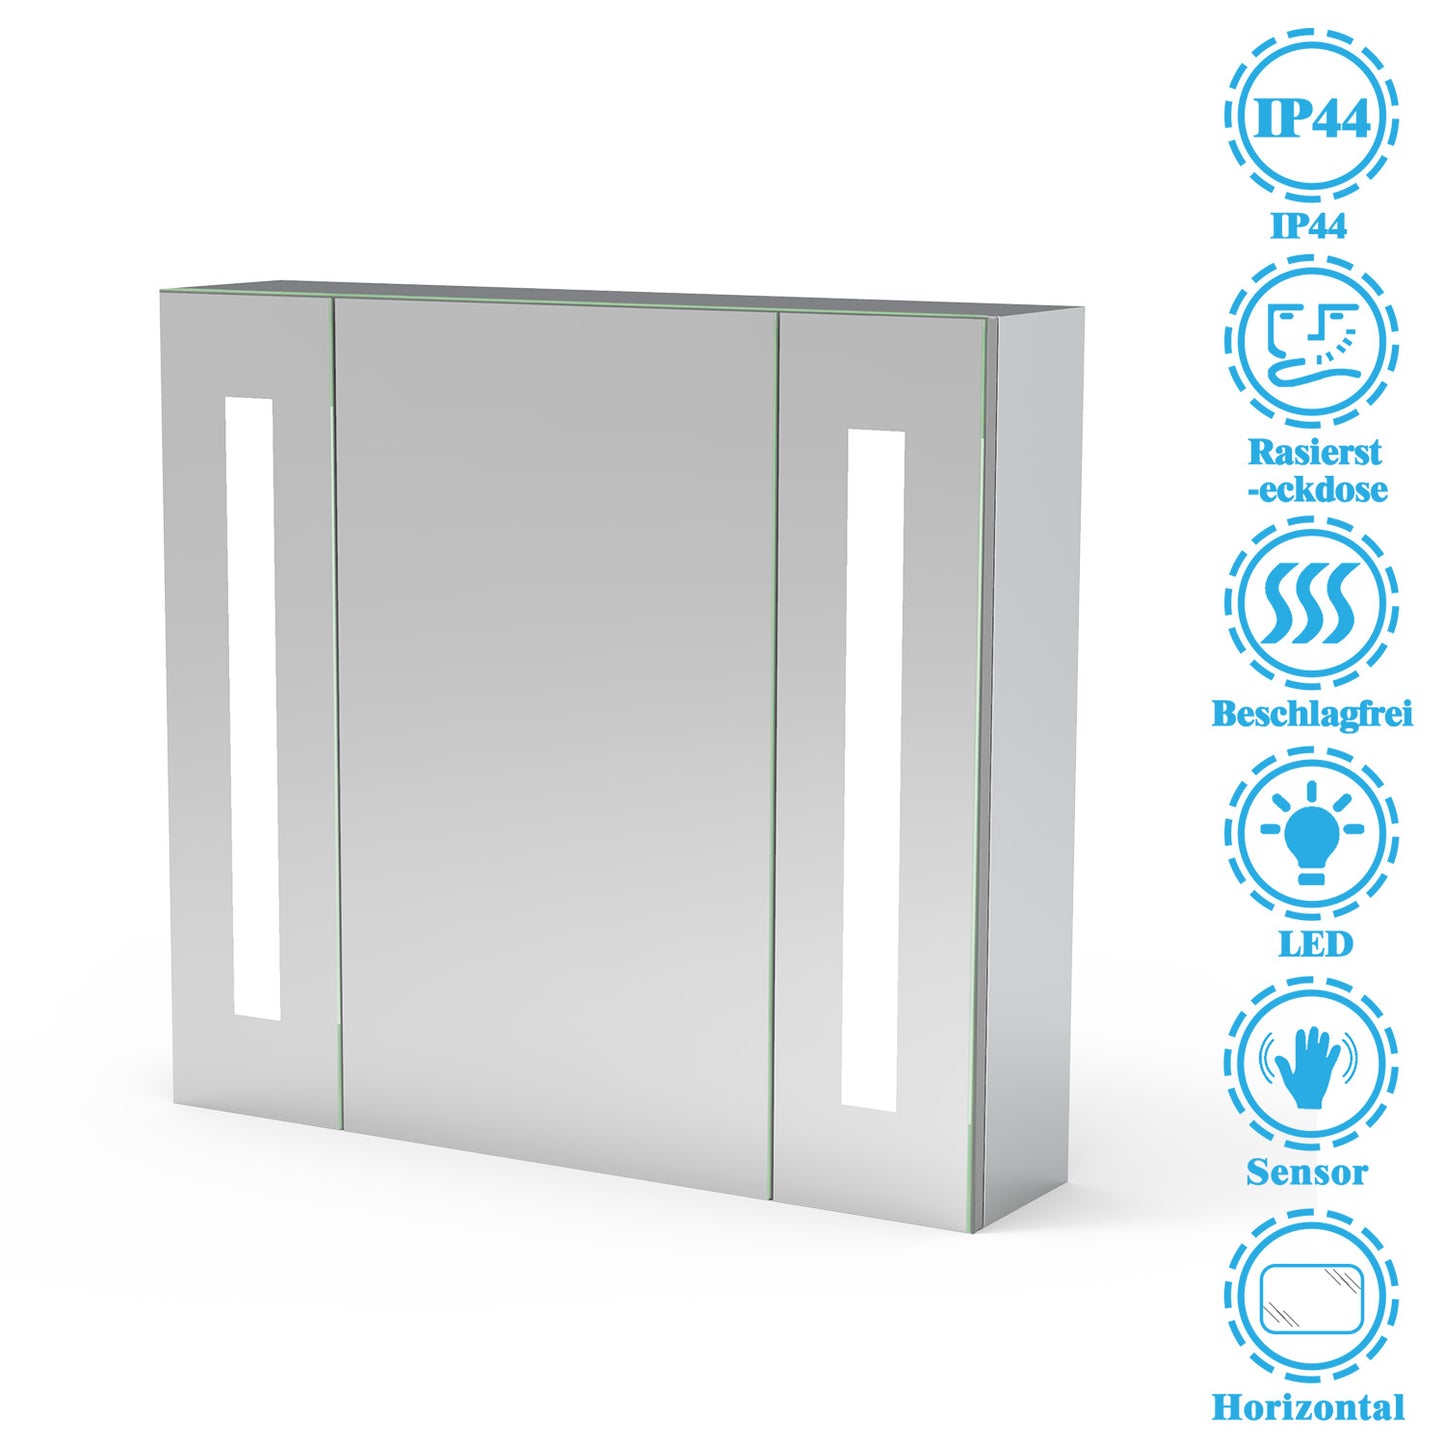 LED Spiegelschrank LISA 65x60cm Badspiegel mit Beleuchtung, Aluminium, Doppelseitiger Spiegel, IR-Sensor Schalter, Rasier Steckdose, Beschlagfrei